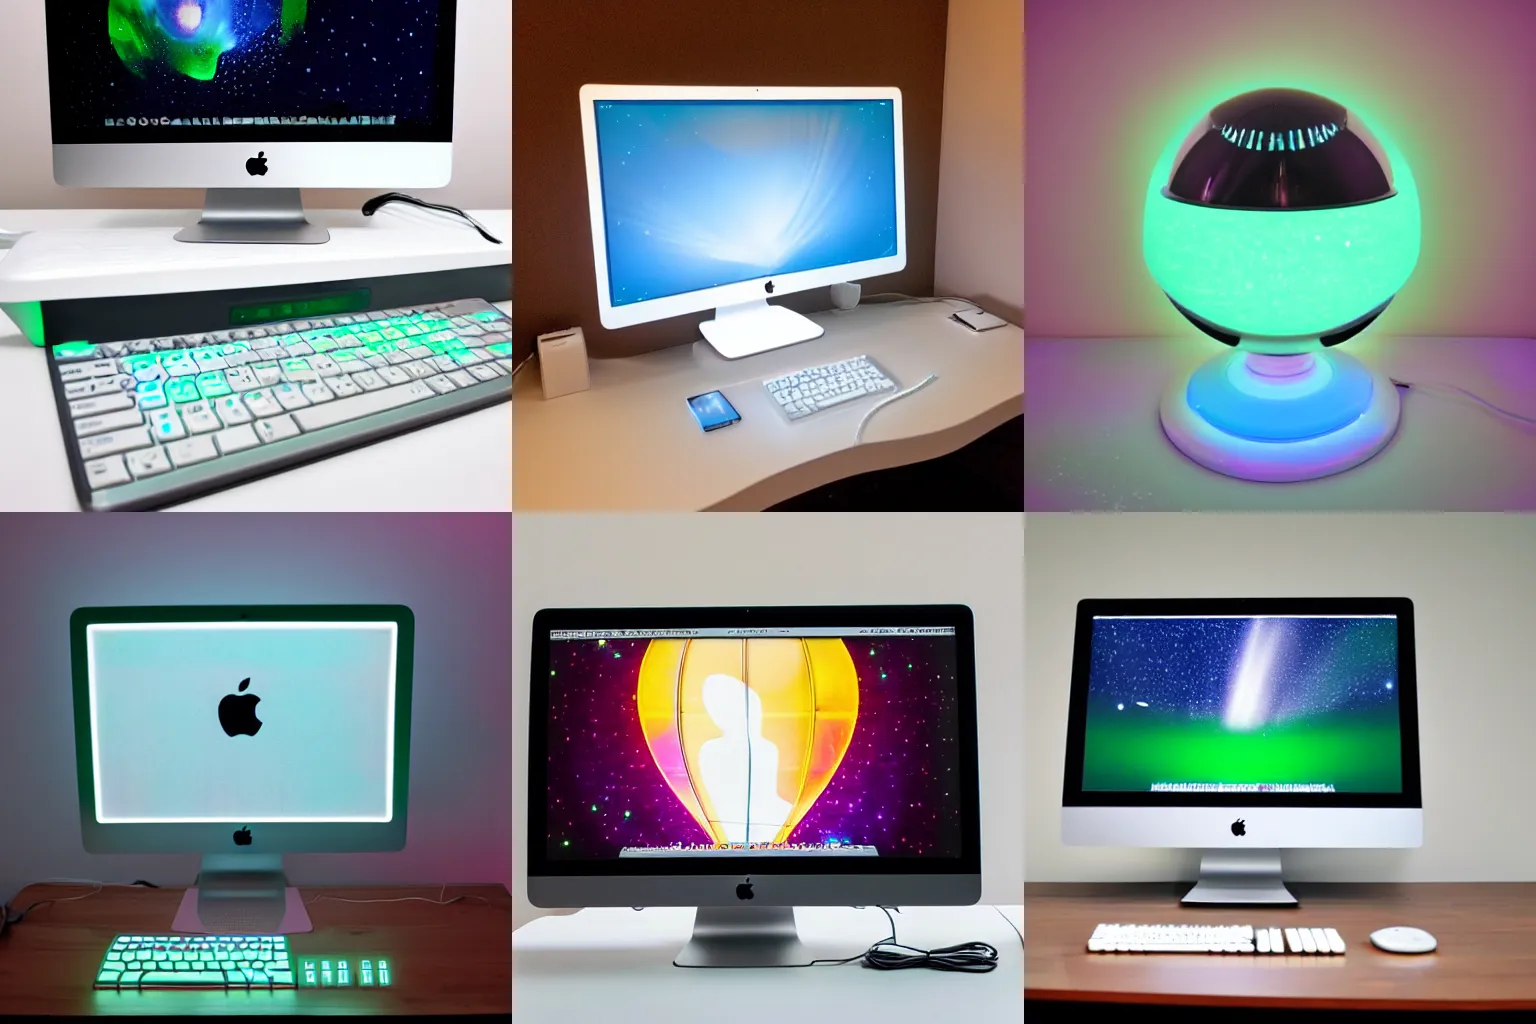 Prompt: glow in the dark iMac g3